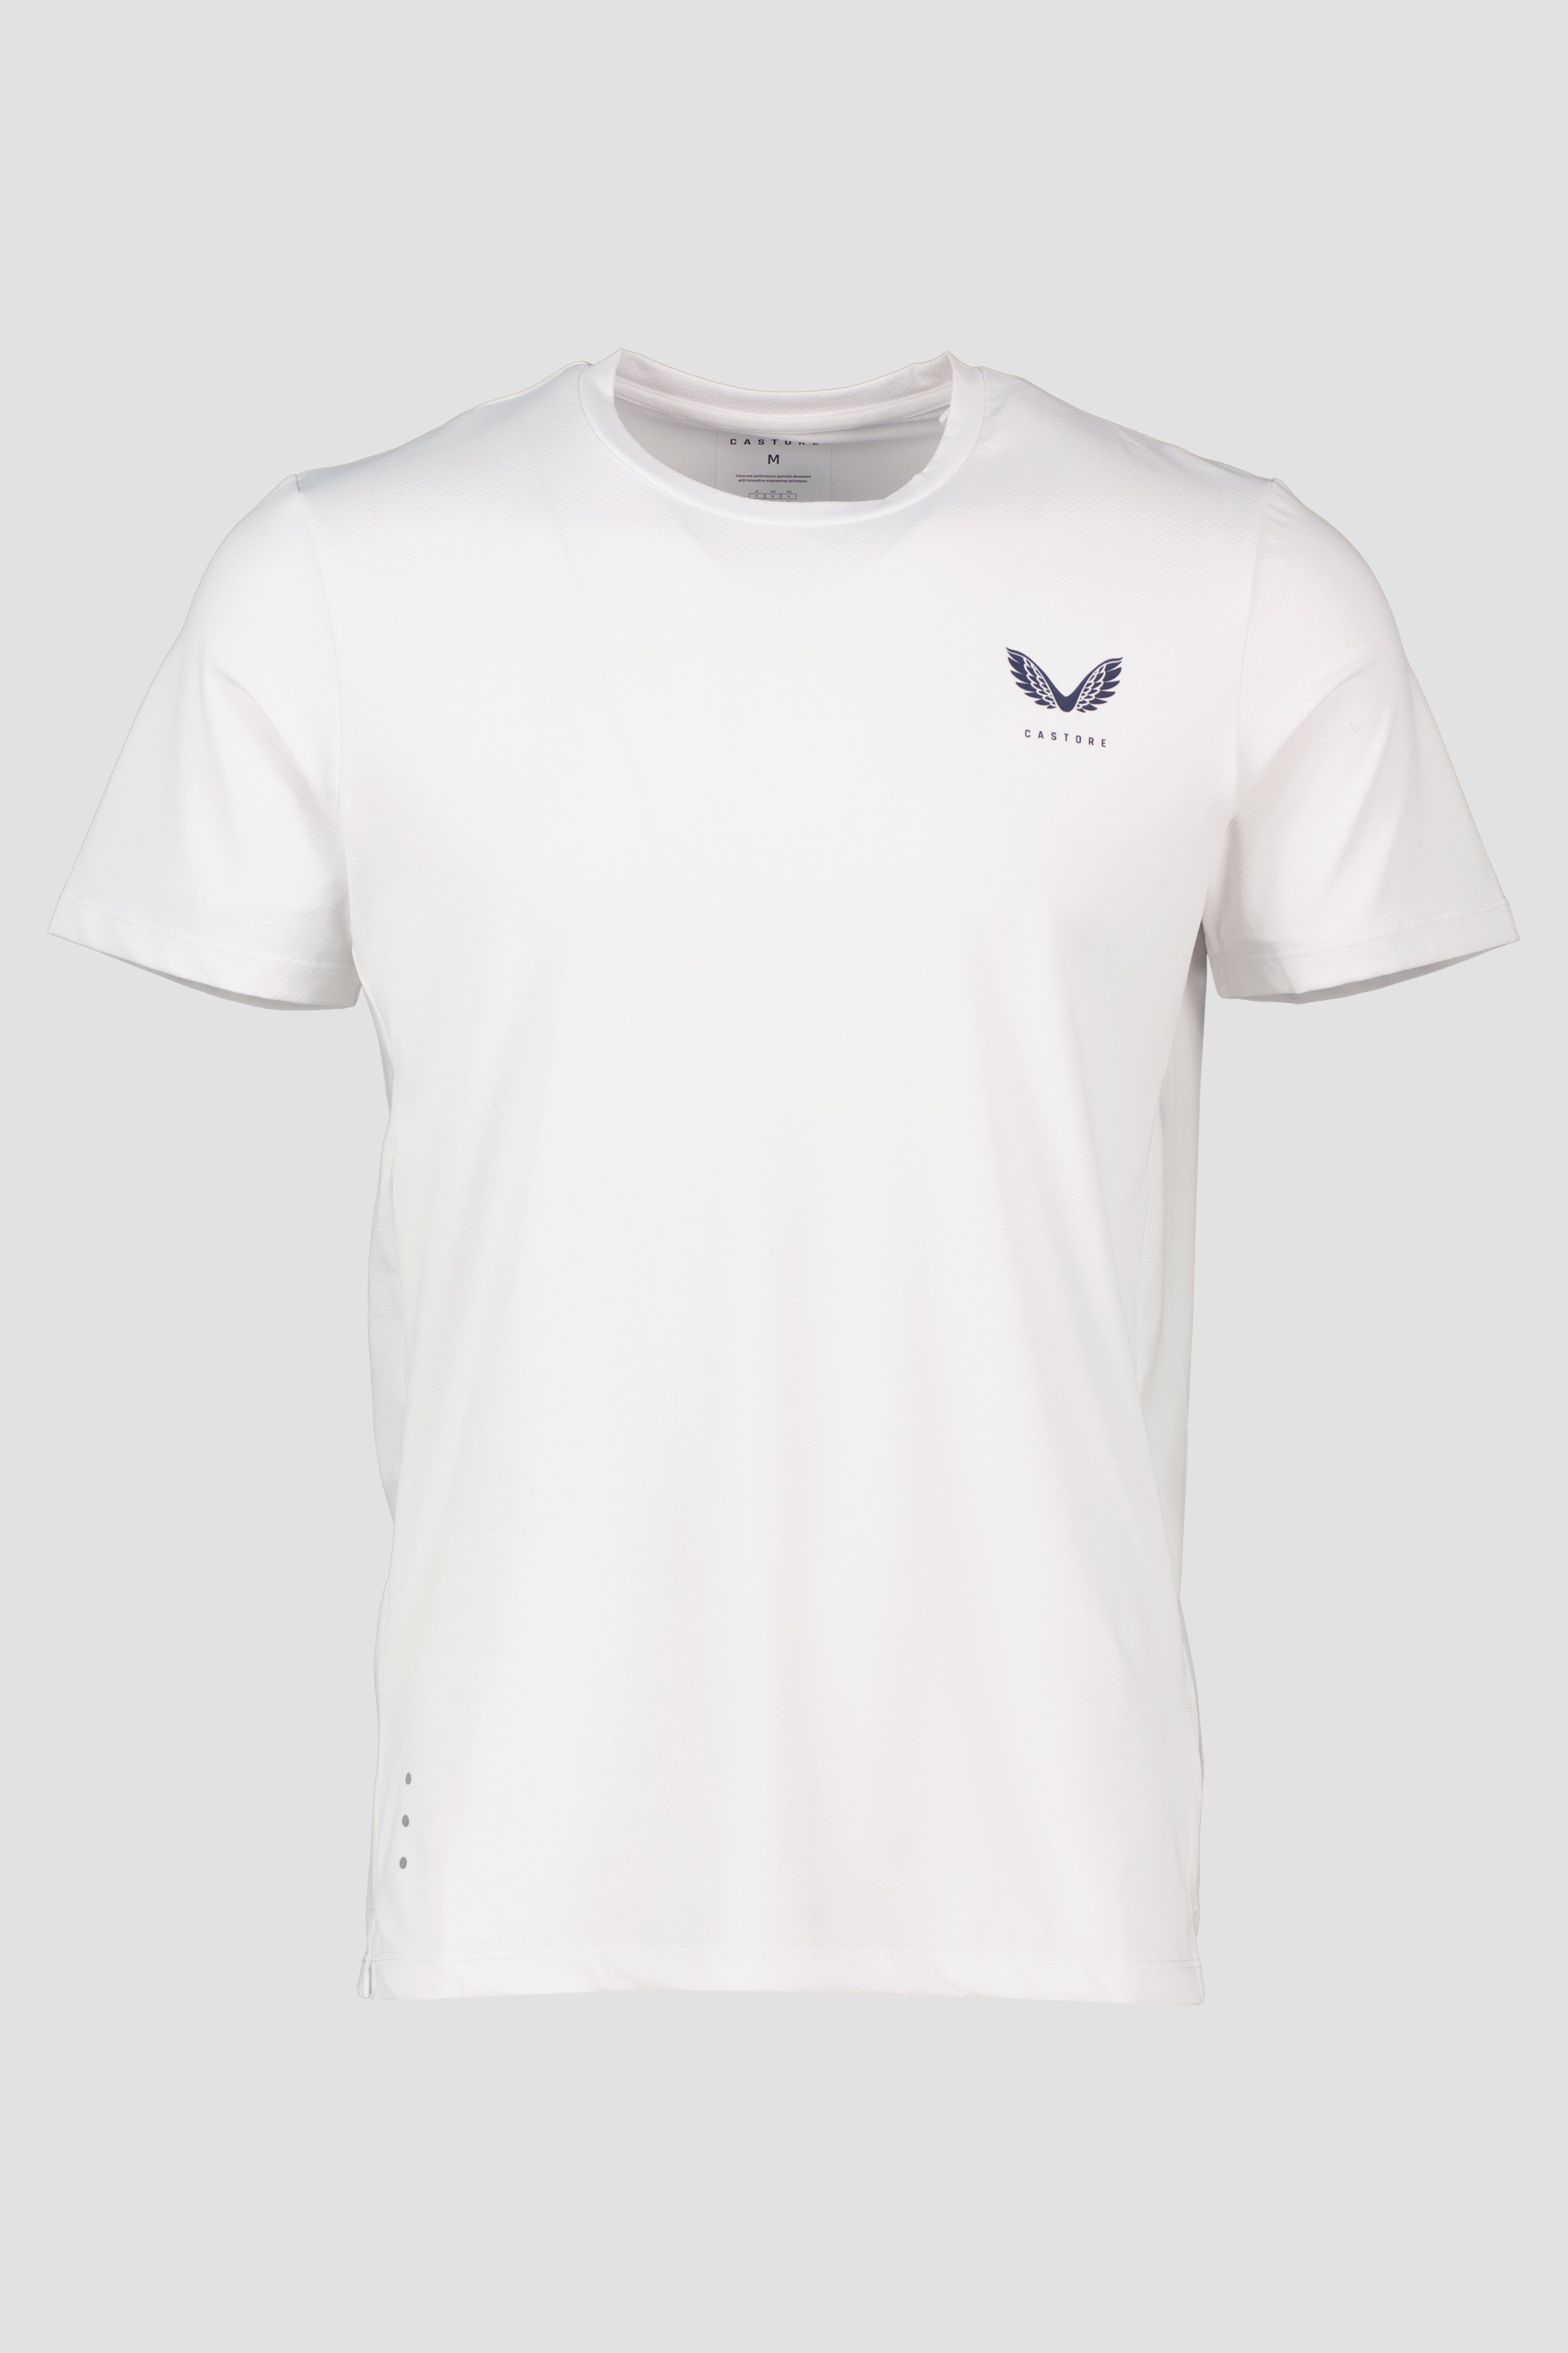 Men's Castore White Performance T Shirt